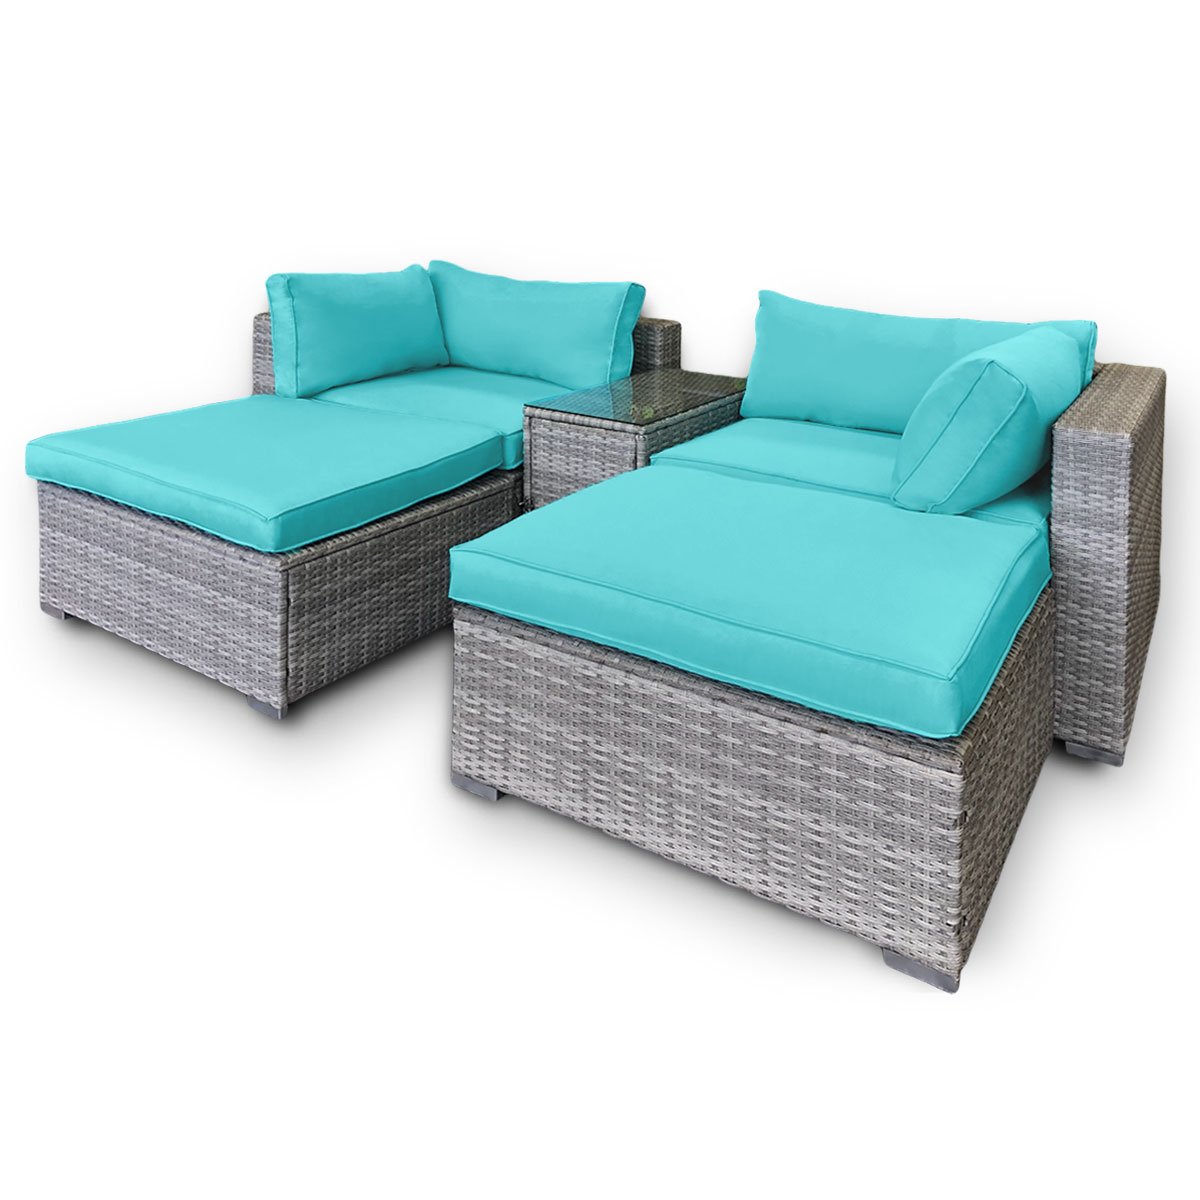 Rattan Outdoor 5pc Corner Chairs Ottoman Furniture Lounge - Aqua 1